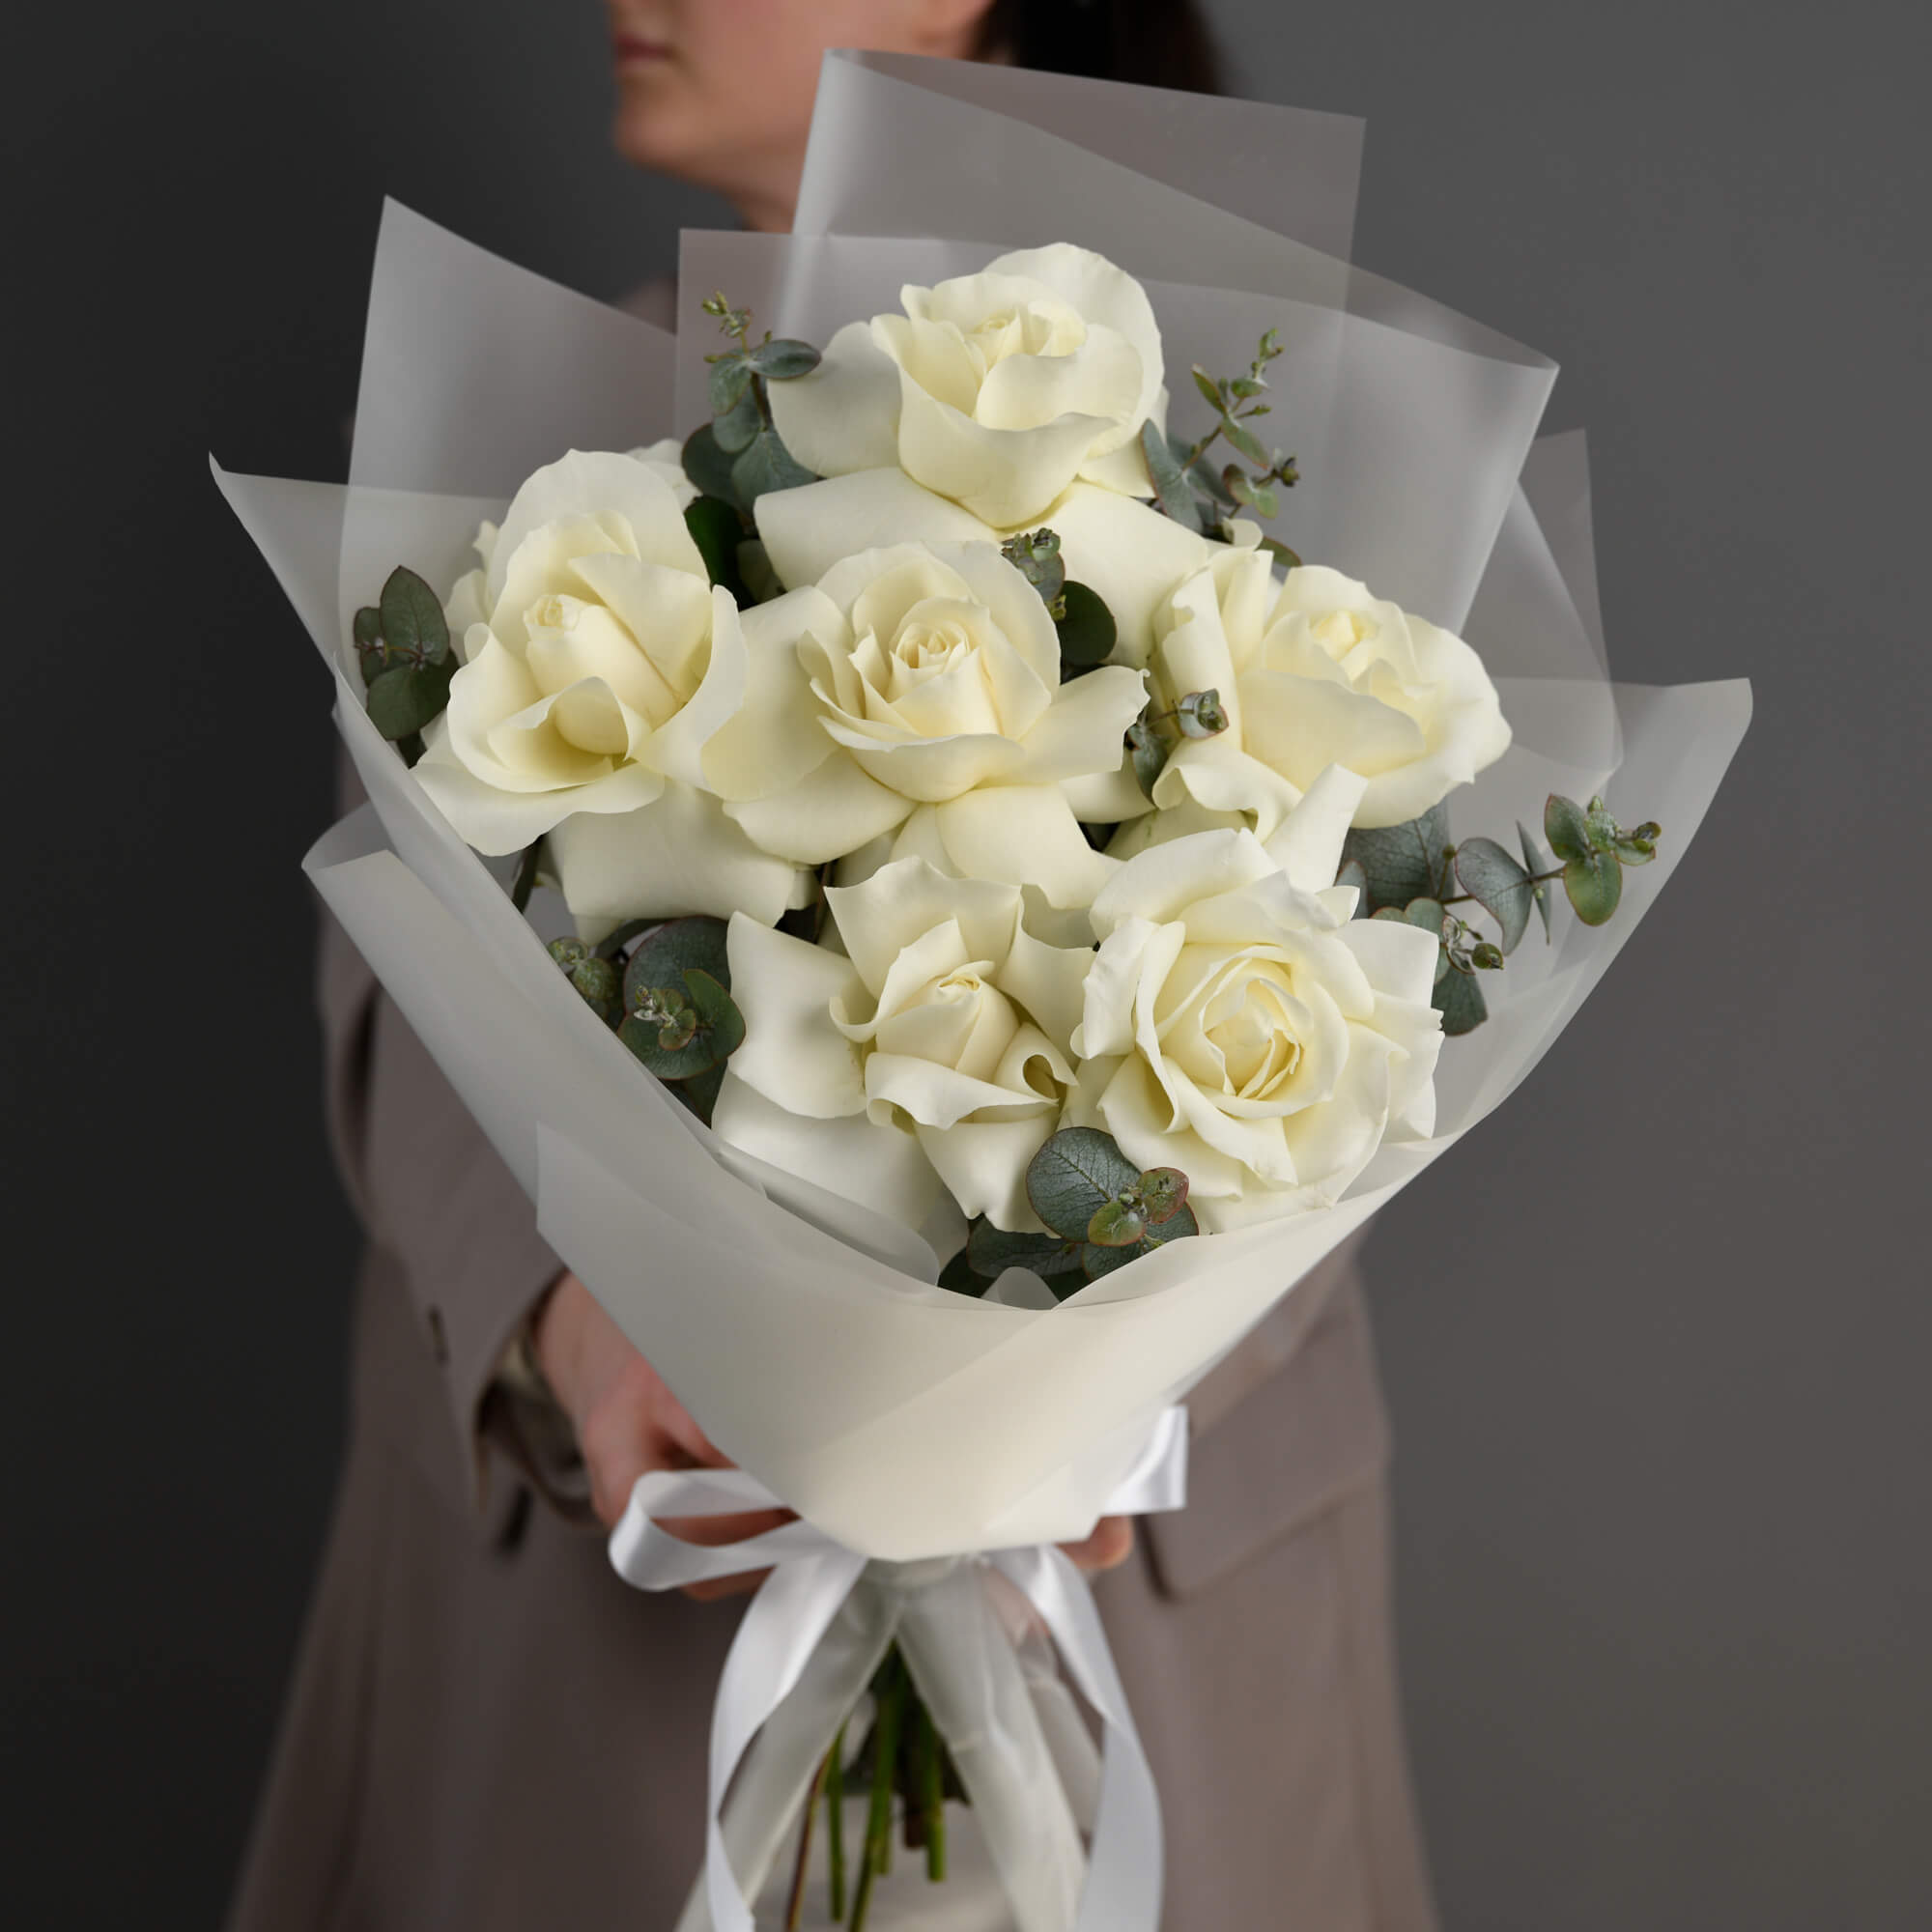 Buchet cu 7 trandafiri albi speciali si eucalipt, 2